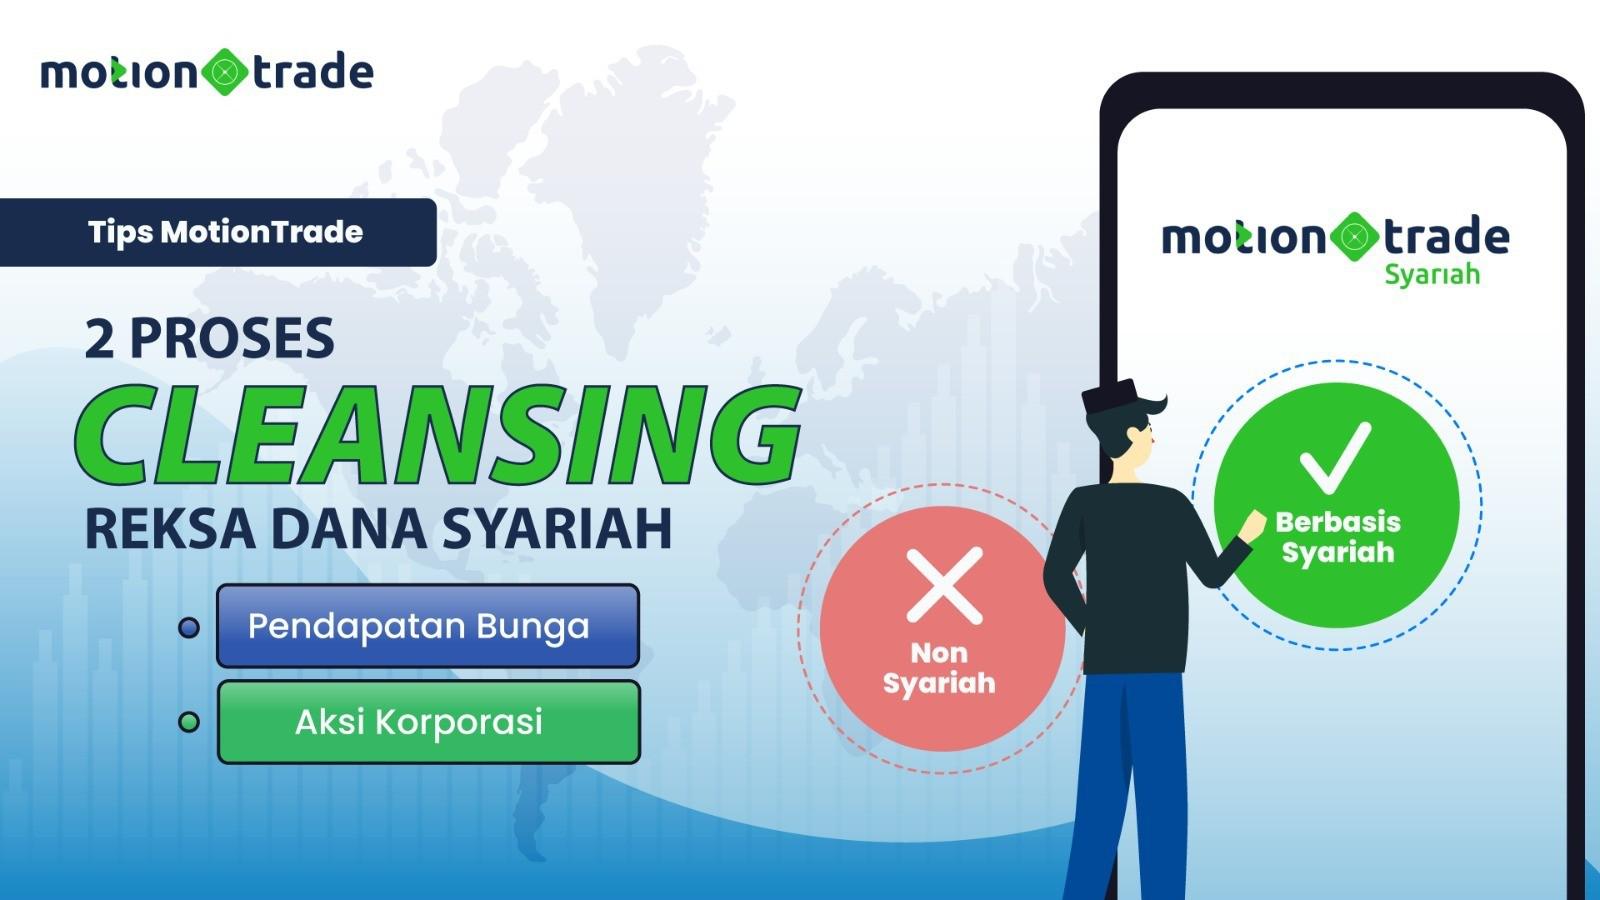 Dear Investor, Begini Proses Cleansing Reksa Dana Syariah